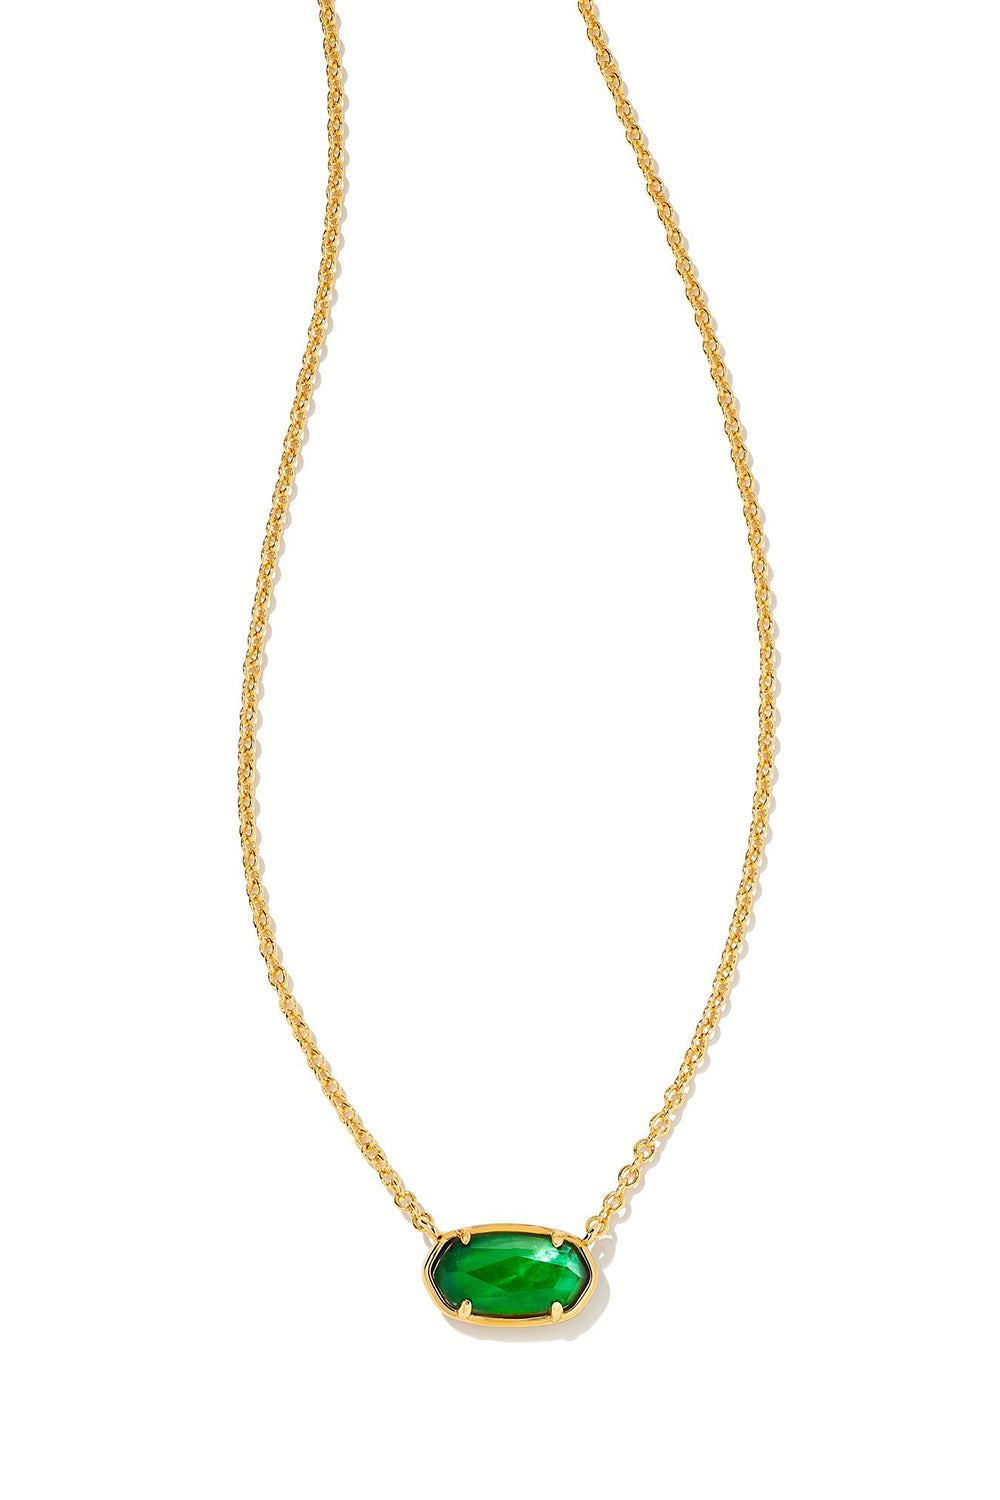 Kendra Scott: Grayson Gold Pendant Necklace - Emerald Illusion | Makk Fashions